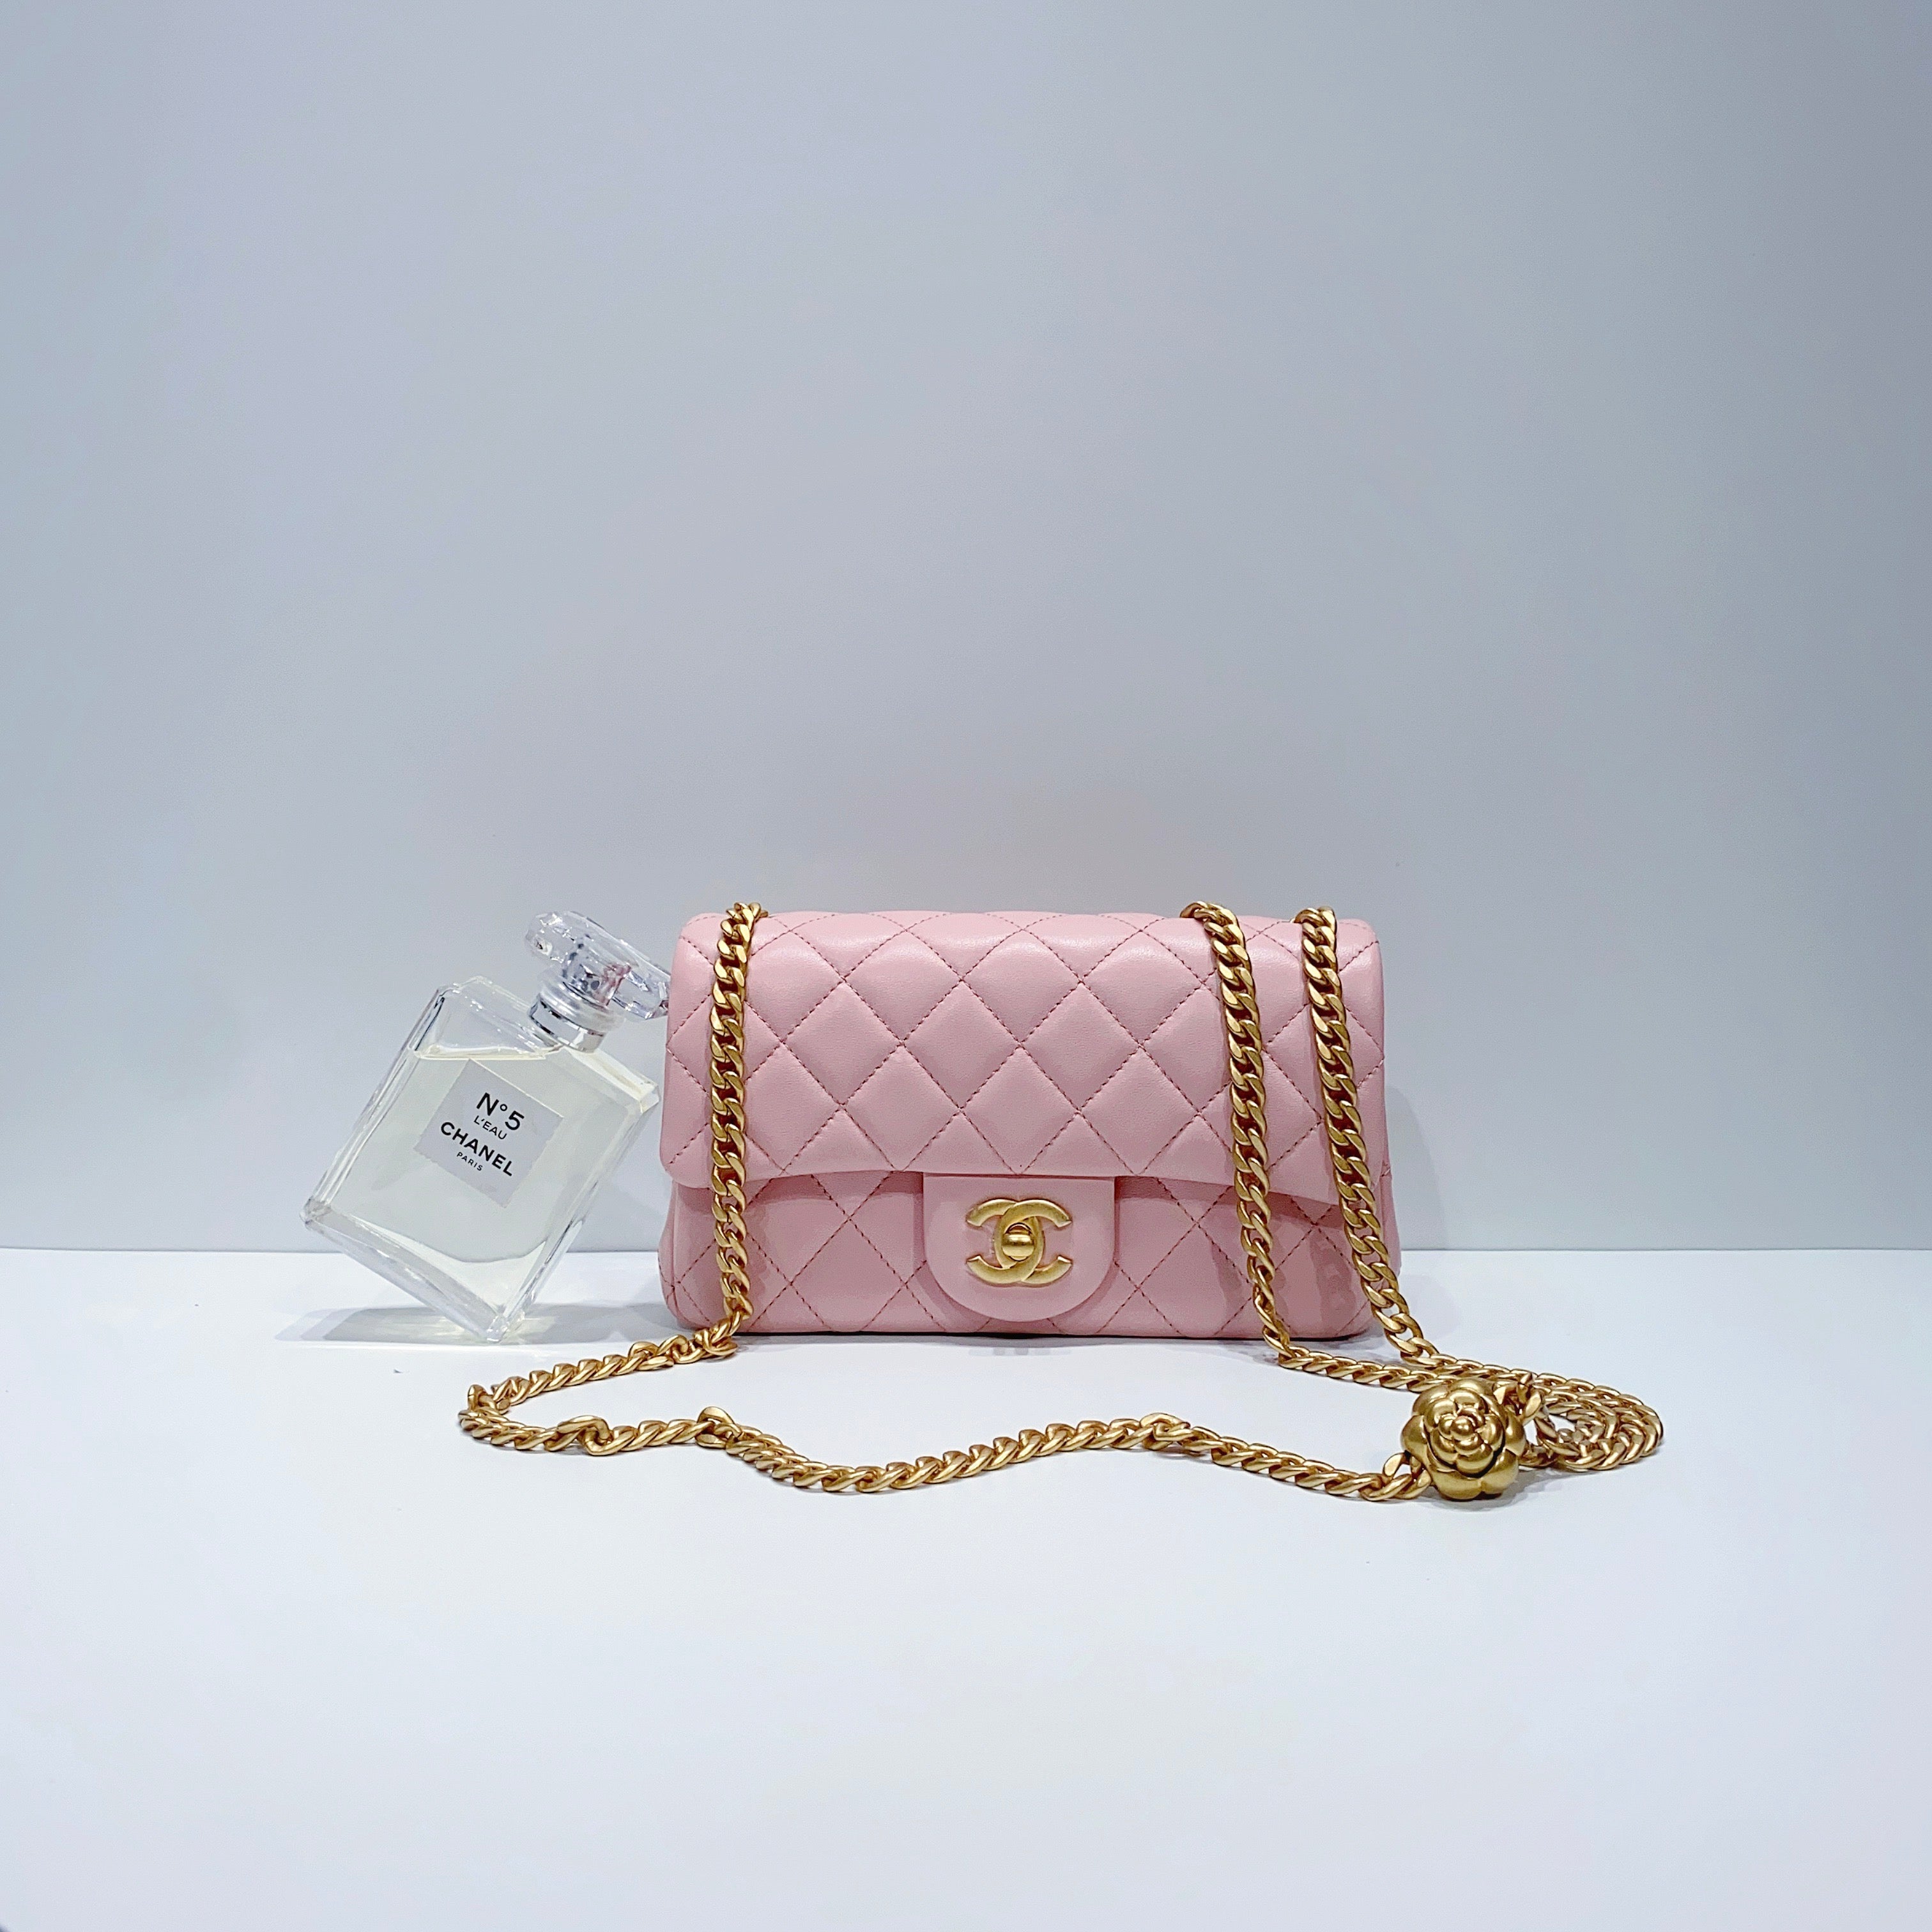 vintage pink chanel purse